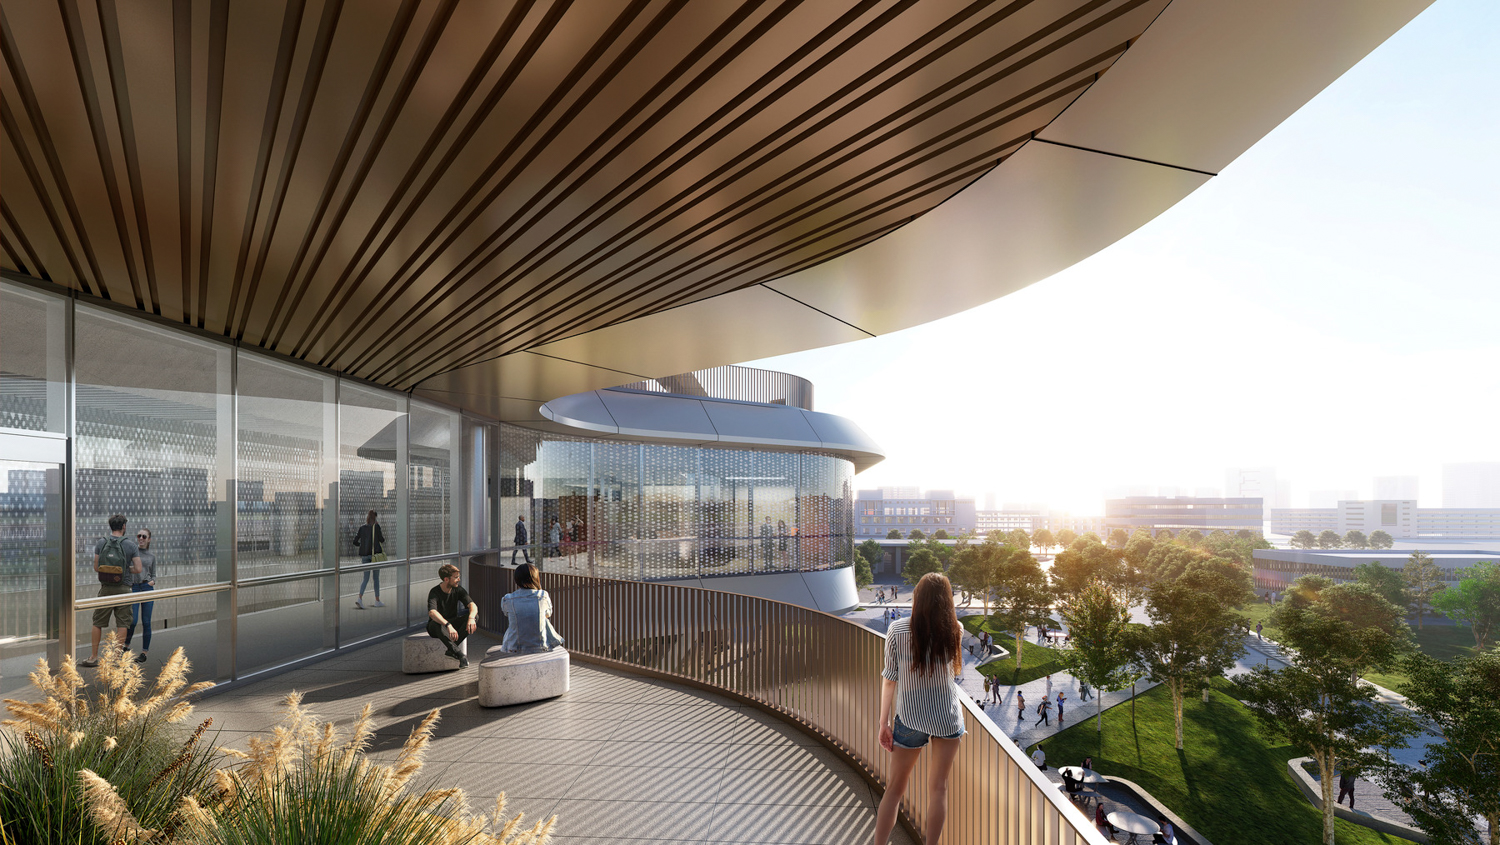 San Jose City College Career Education Complex amenity deck, design by Steinberg Hart